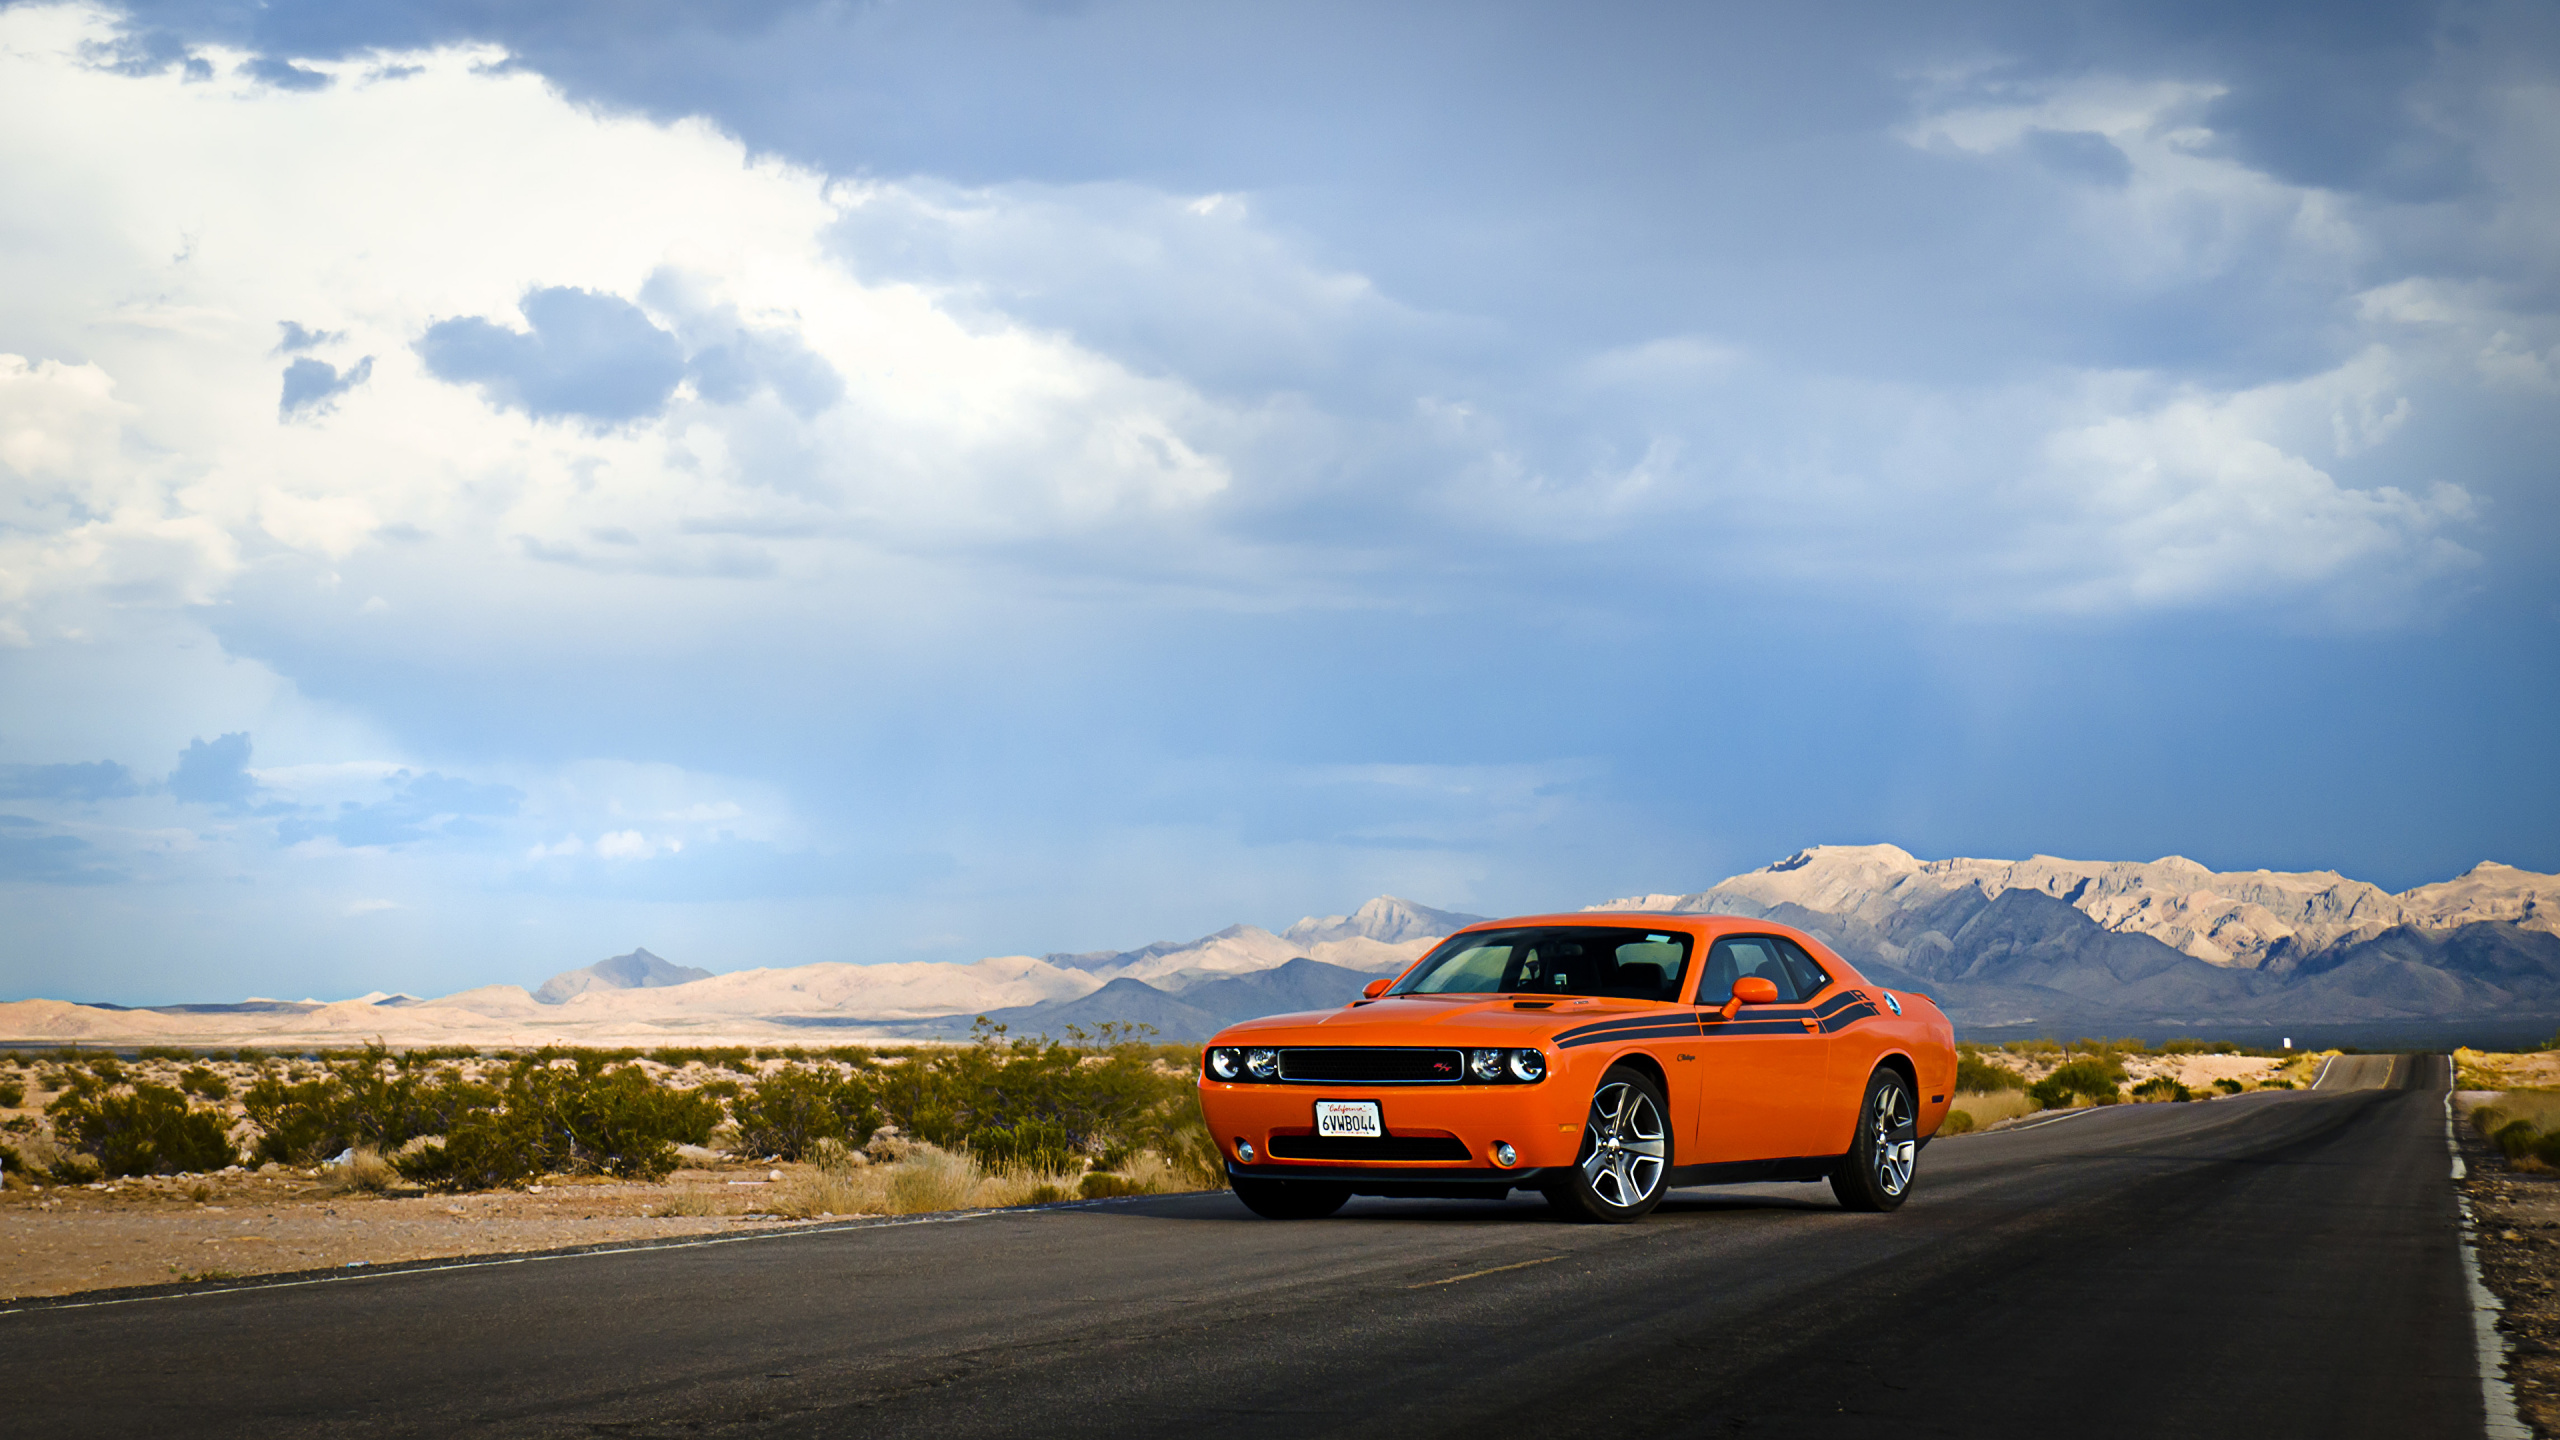 Orange Chevrolet Camaro on Road During Daytime. Wallpaper in 2560x1440 Resolution